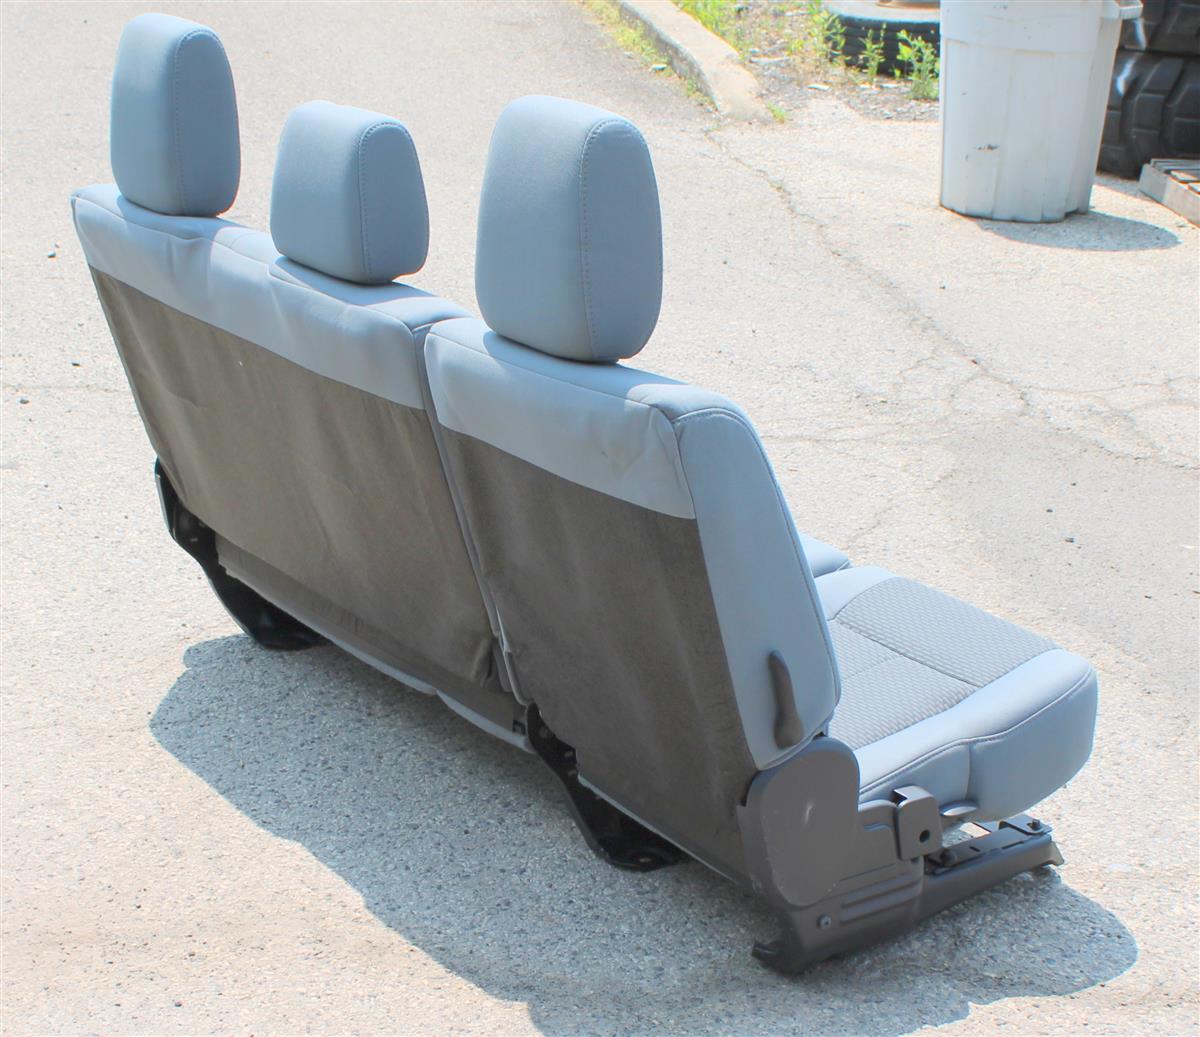 SP-2994 | _SP-2994 6040 Split Fold Down Vehicle Bench Seats  (24).JPG